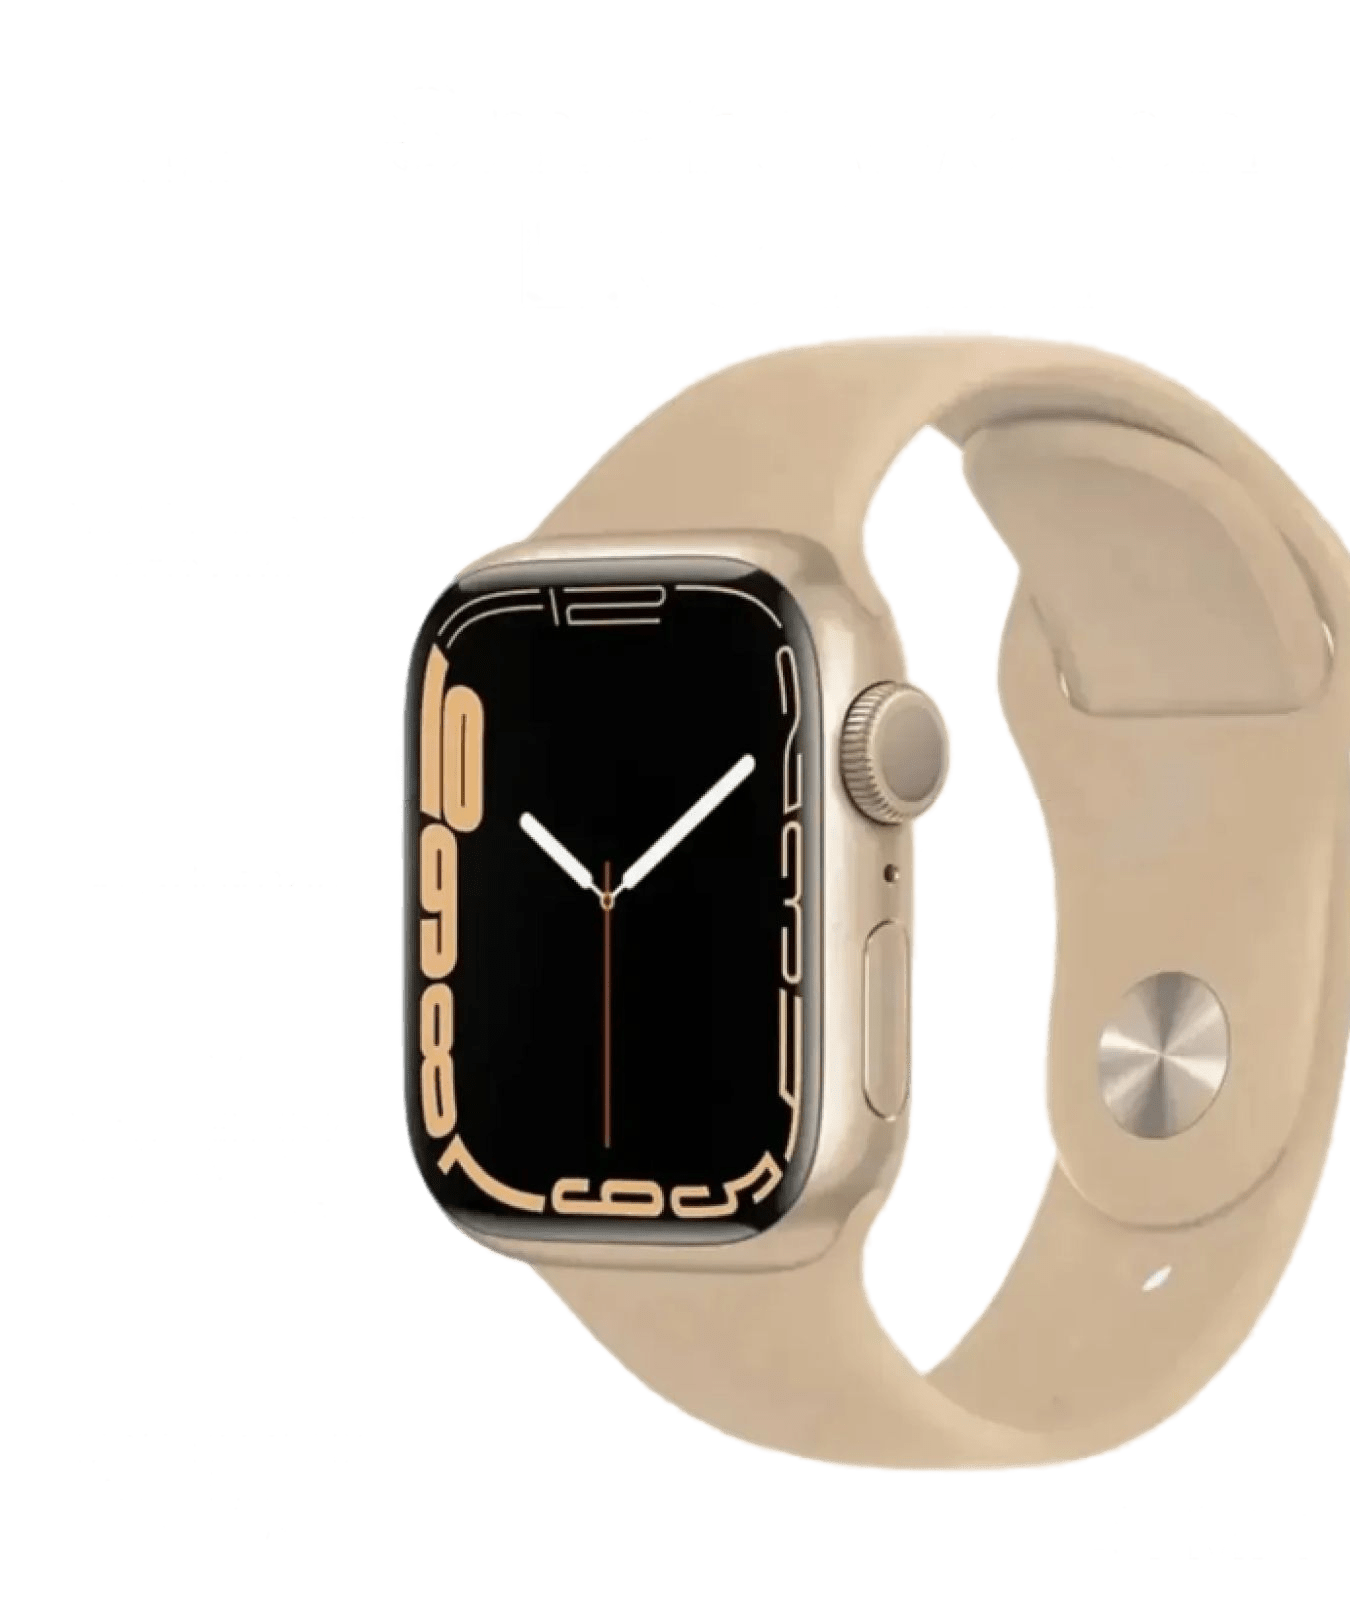 Эпл вотч се. Apple watch se 44mm. Часы Apple IWATCH se 44mm. Часы Эппл вотч 6. Эпл вотч se 40 мм.